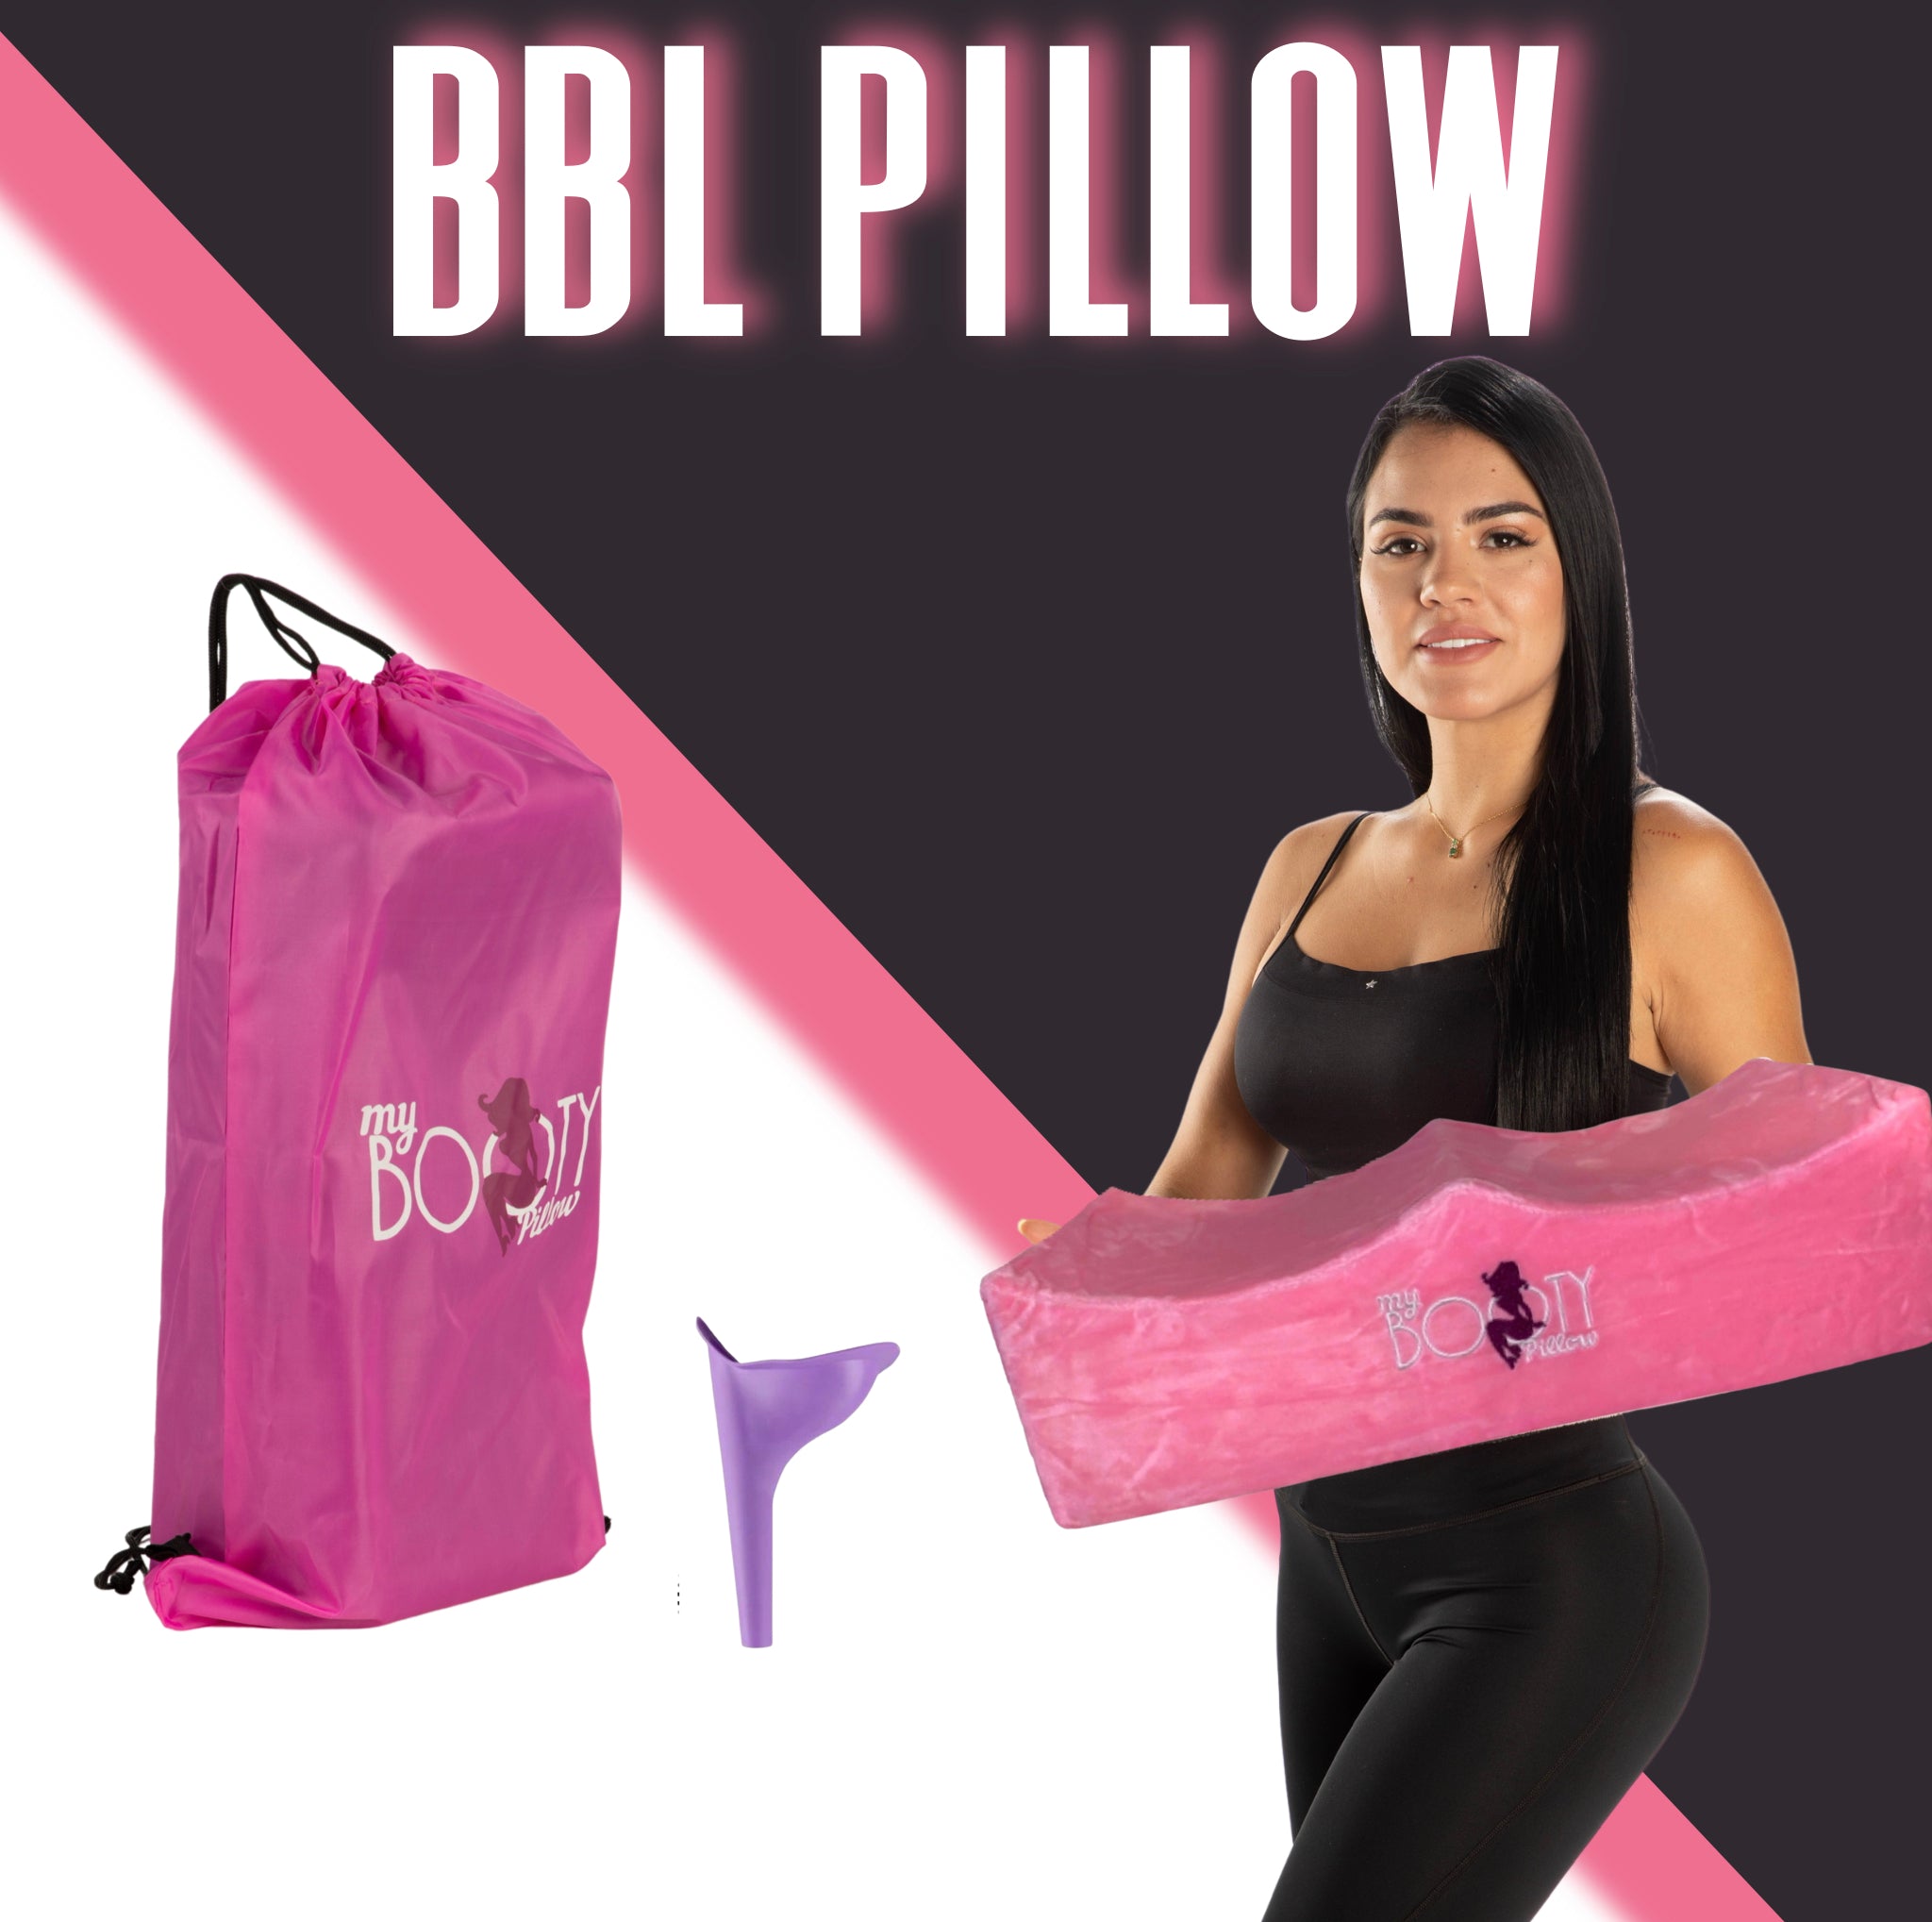  booty pink bbl pillow